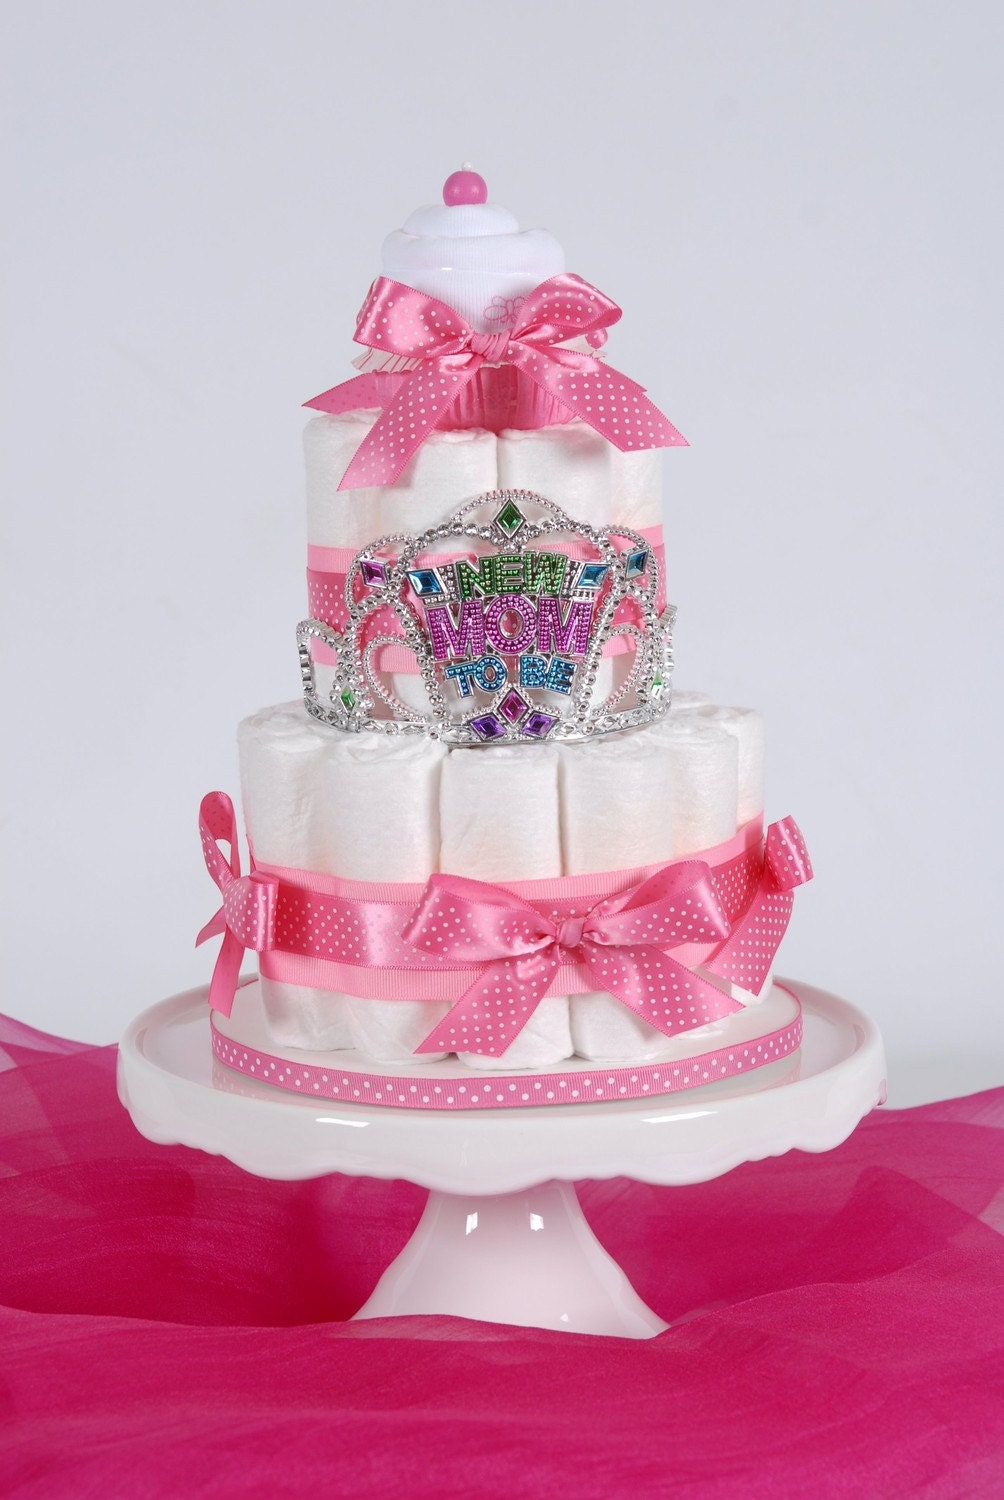 New Mom to be Cake Cupcake Onesie Gift Set The Riley   baby shower   ایده برای تزیین سیسمونی  نوزاد و فرشته كوچولو جشن سیسمونی یا